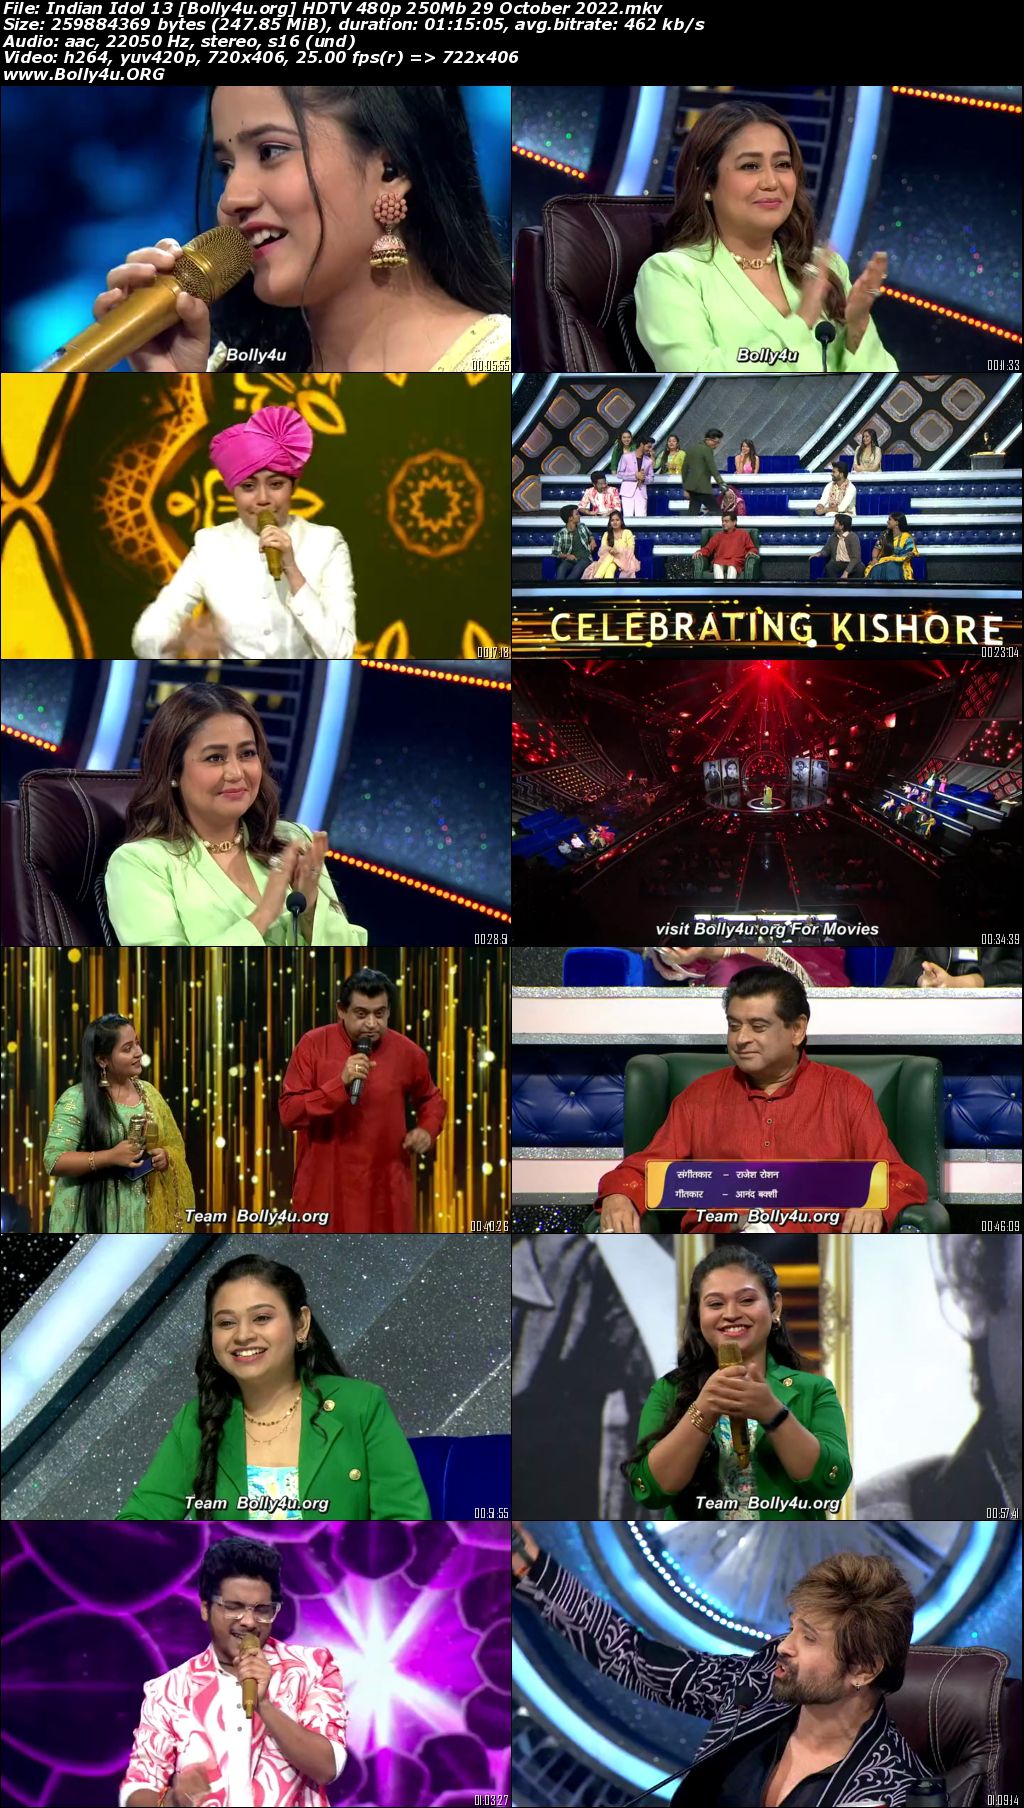 Indian Idol 13 HDTV 480p 250Mb 29 October 2022 Download